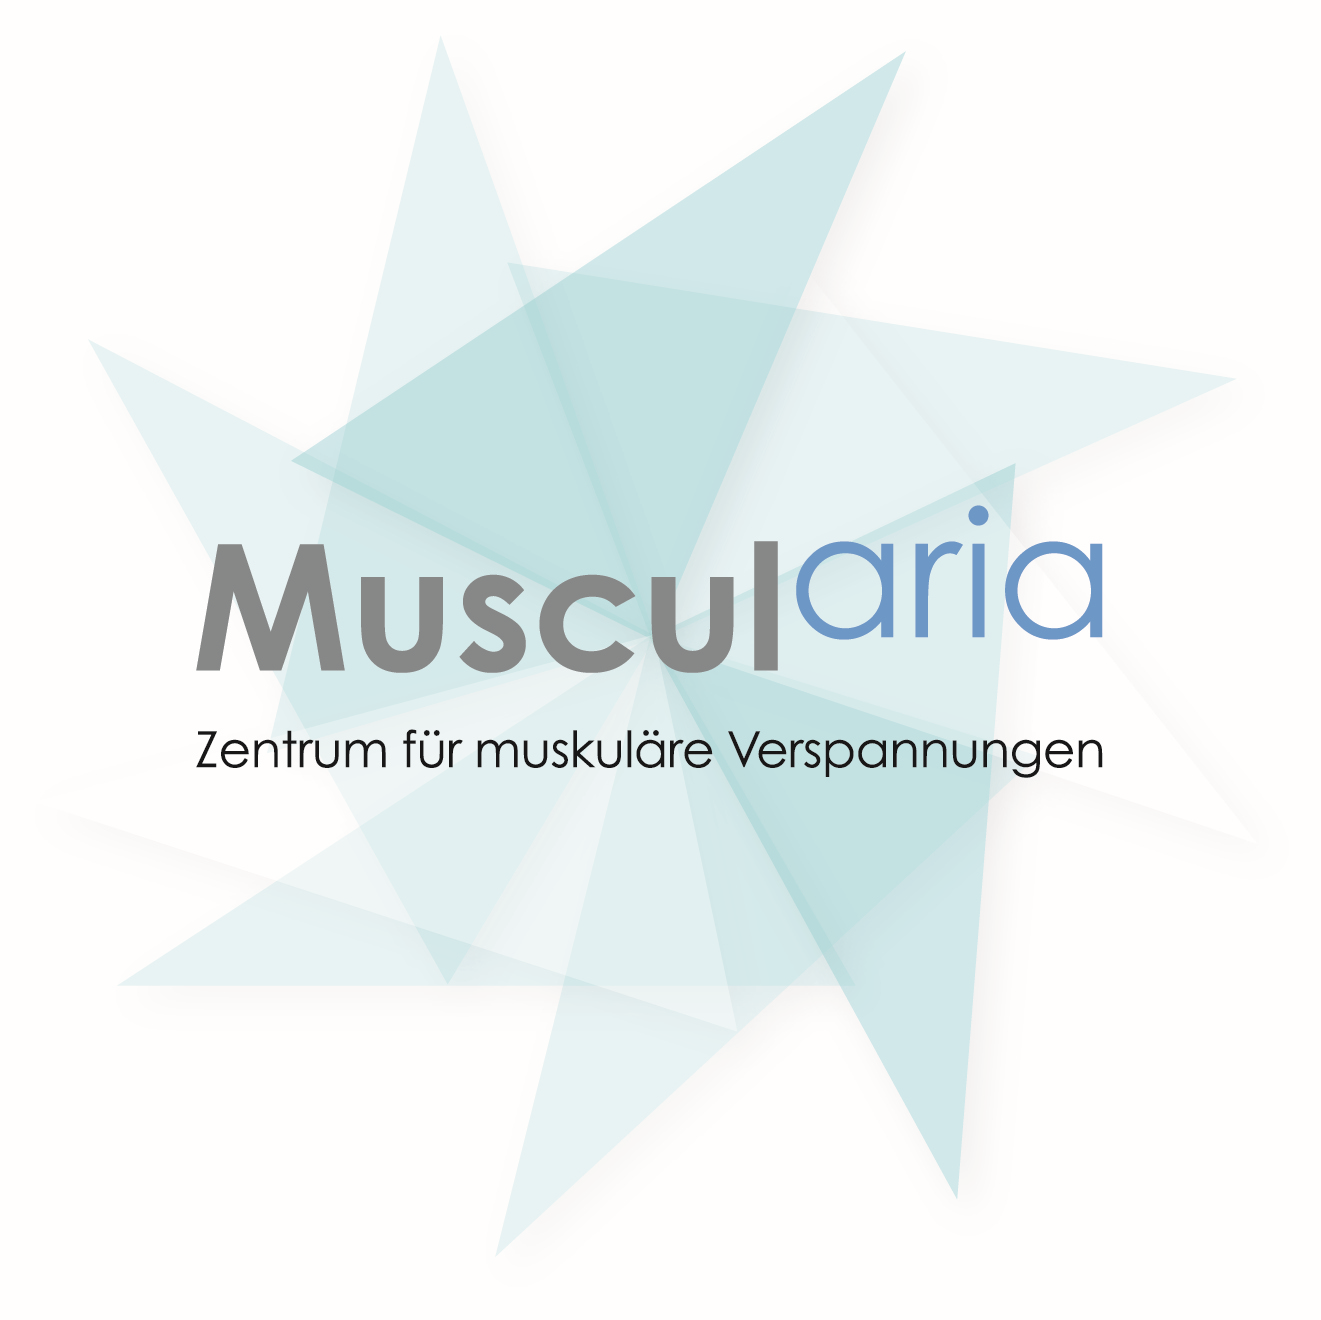 Muscularia GmbH